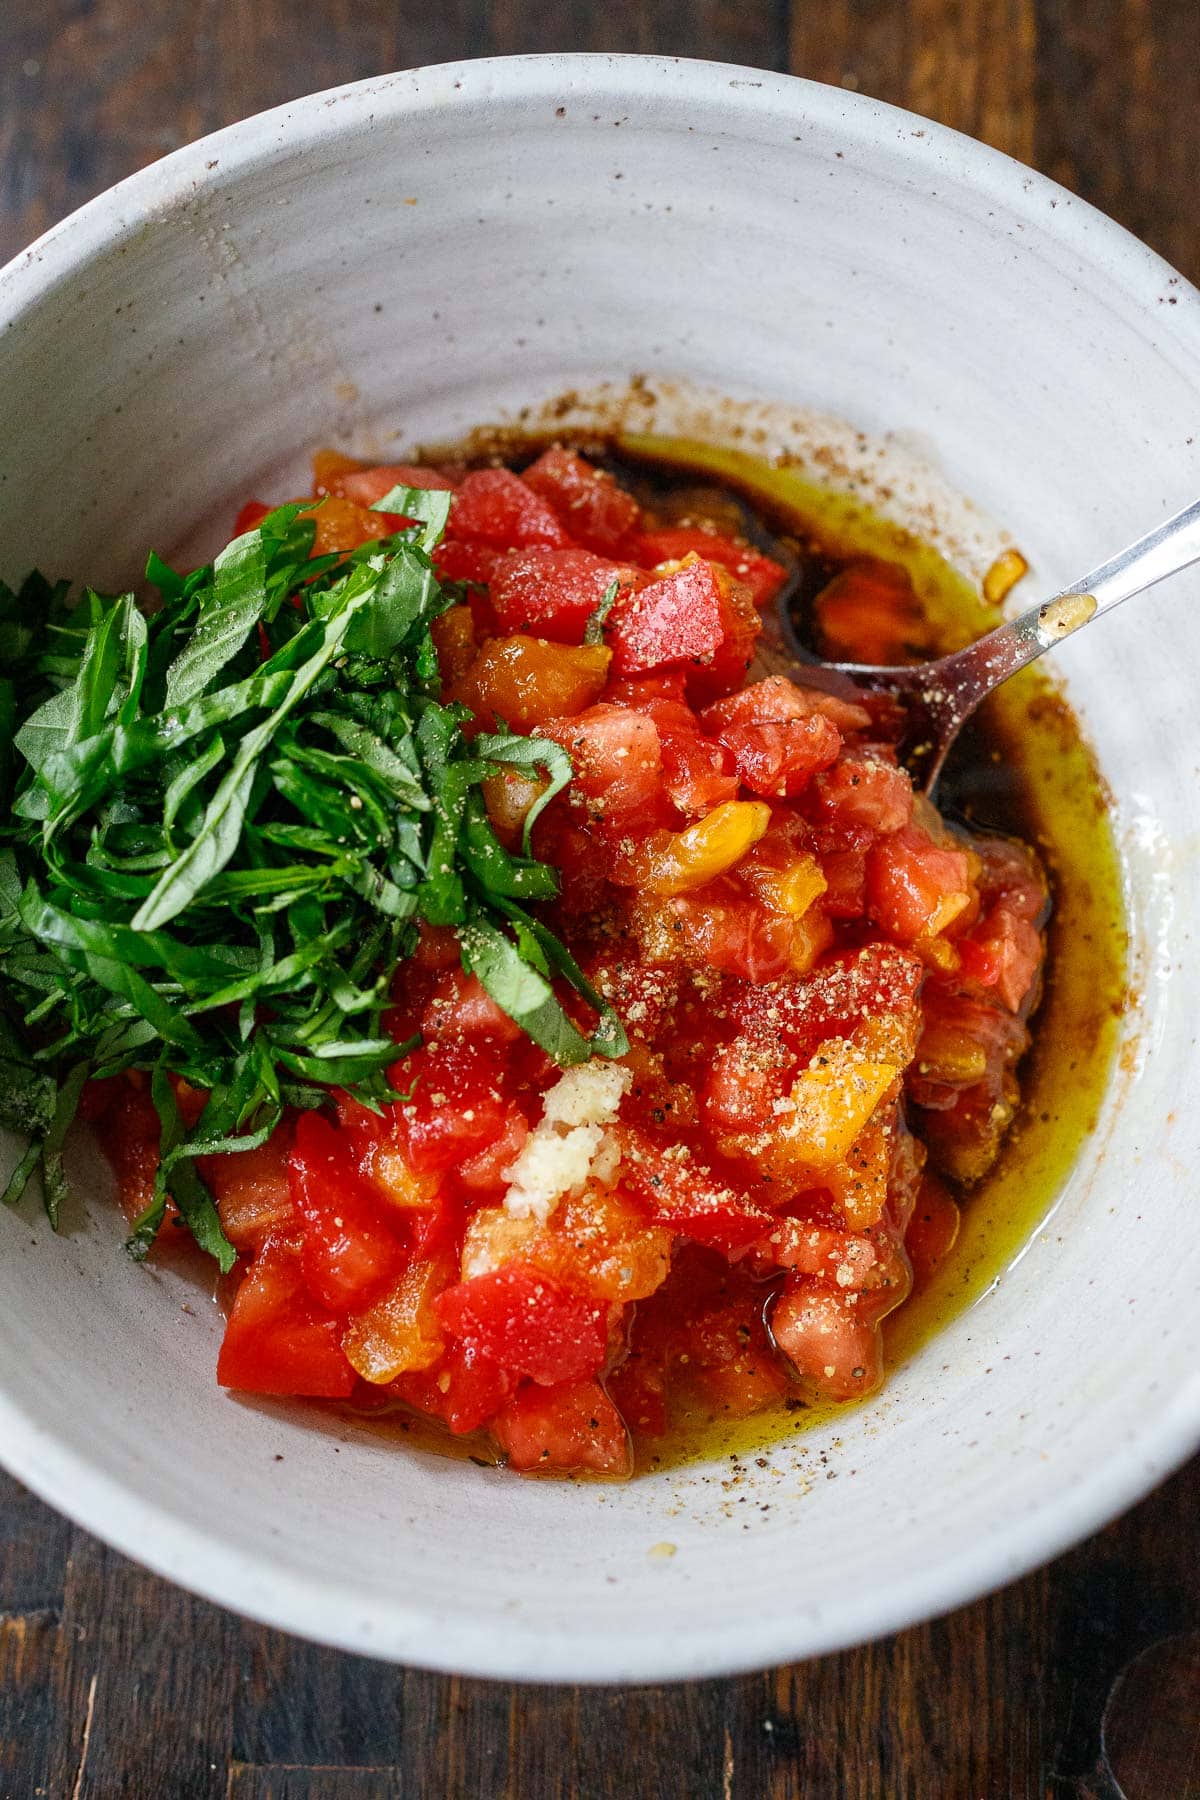 Bruschetta ingredients, tomatoes, basil, garlic, oil and vinegar in bowl